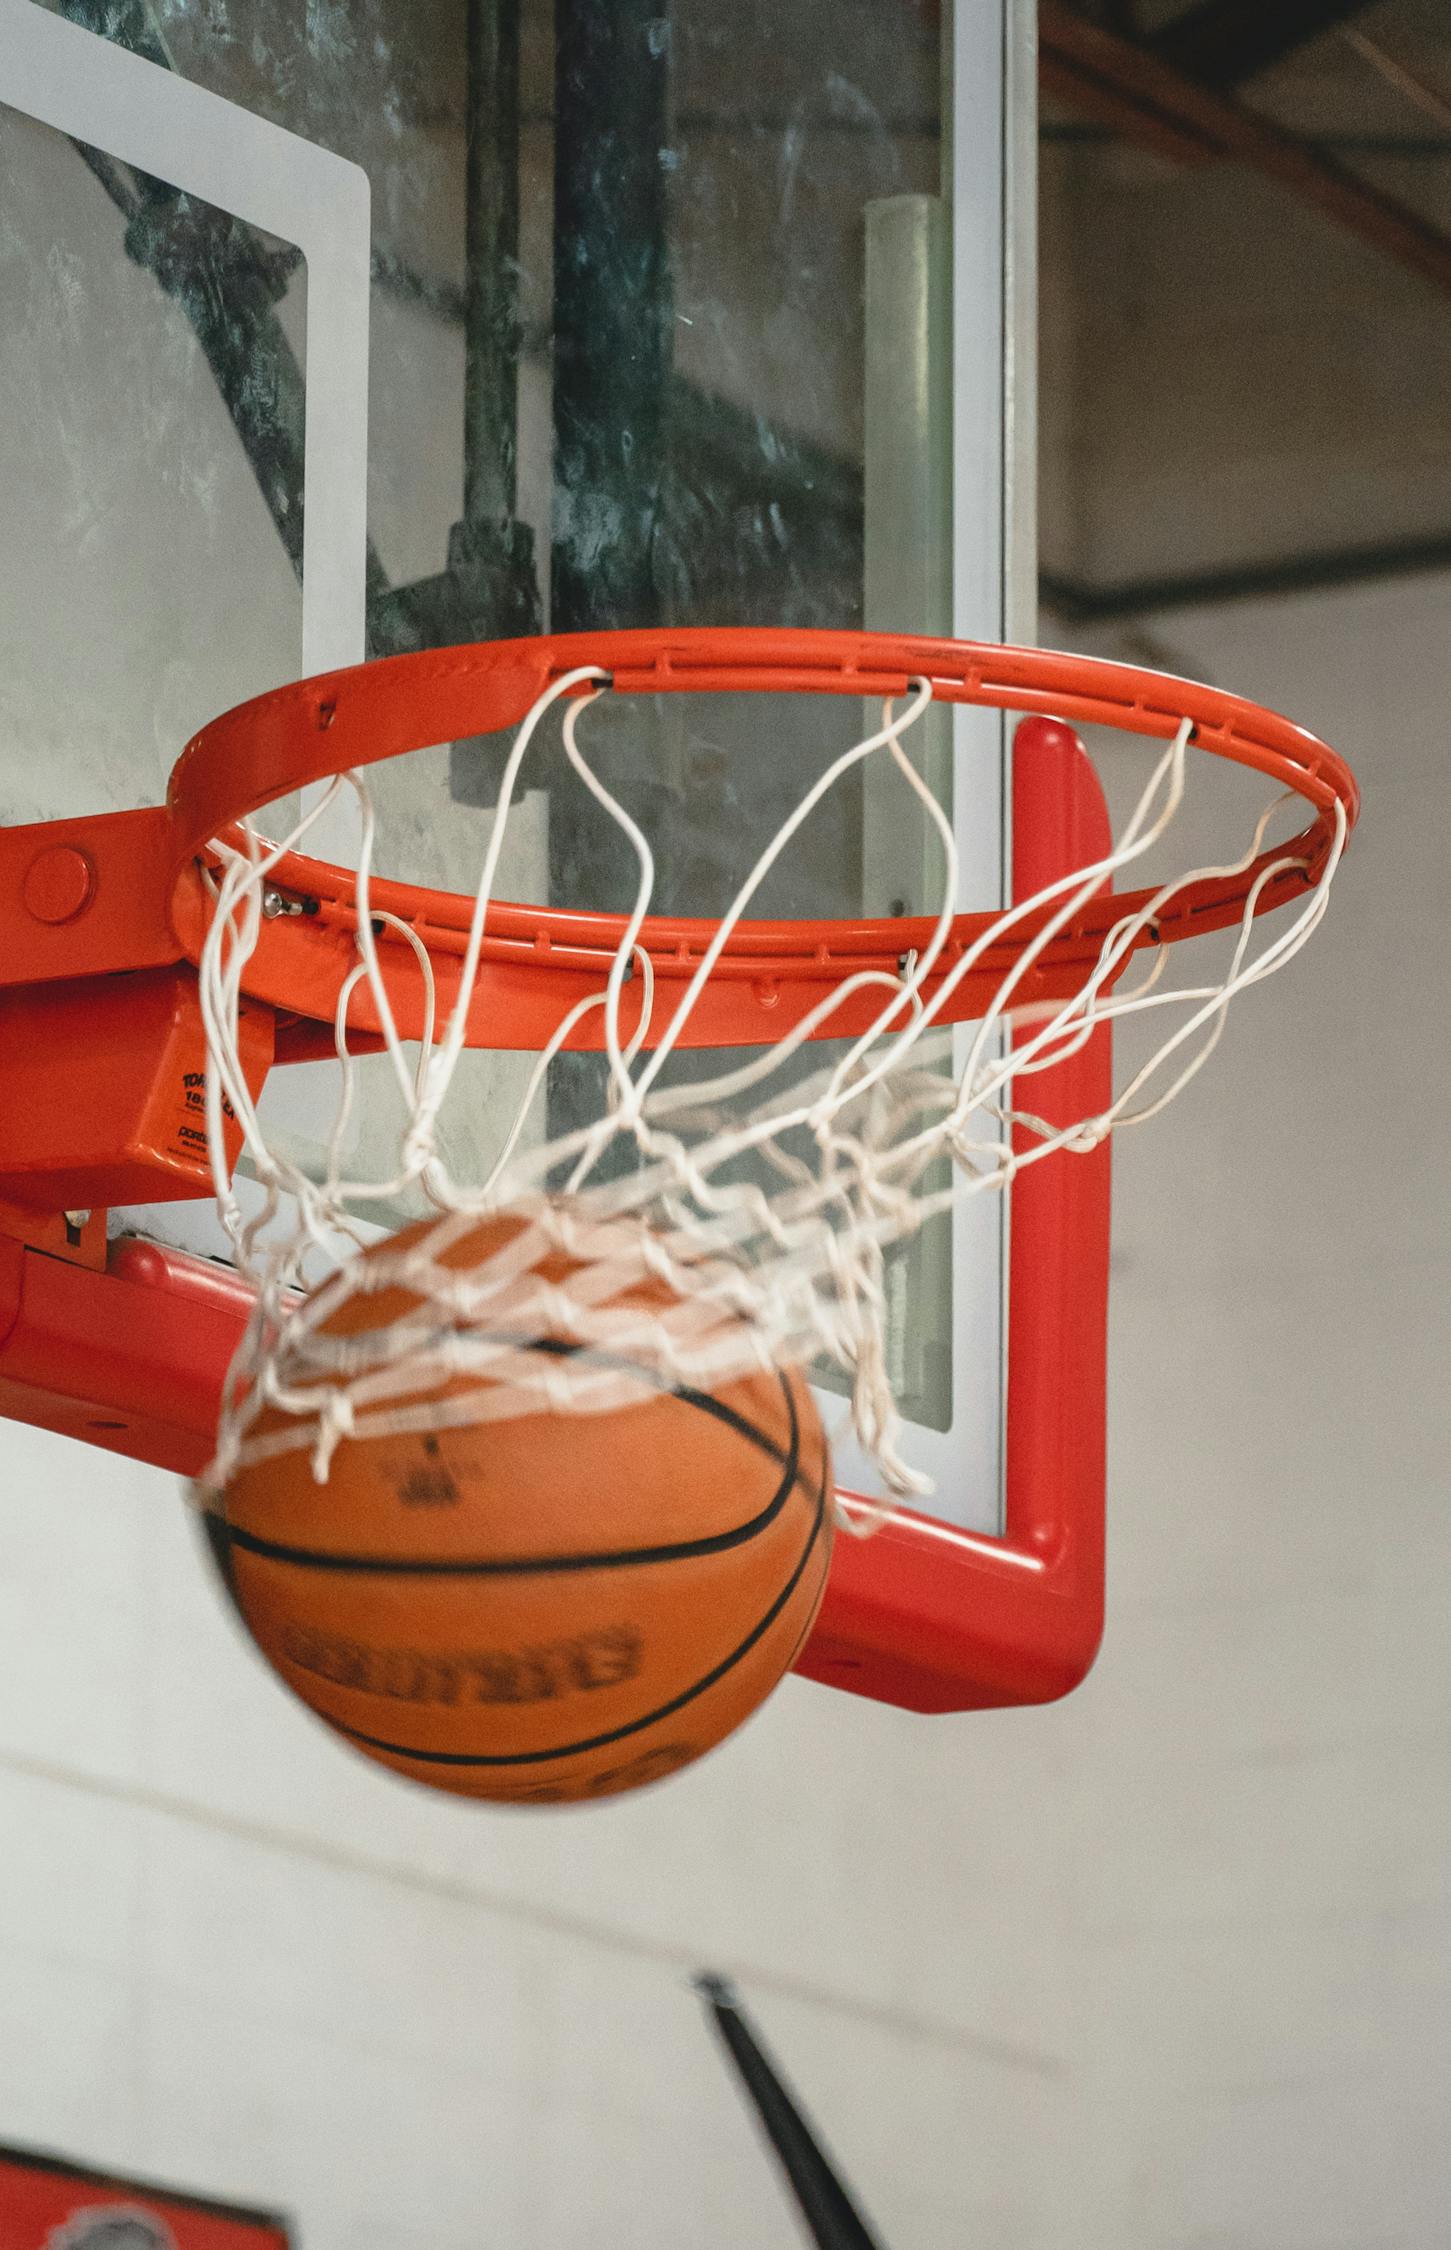 free-stock-photo-of-basketball-basketball-hoop-basketball-swish